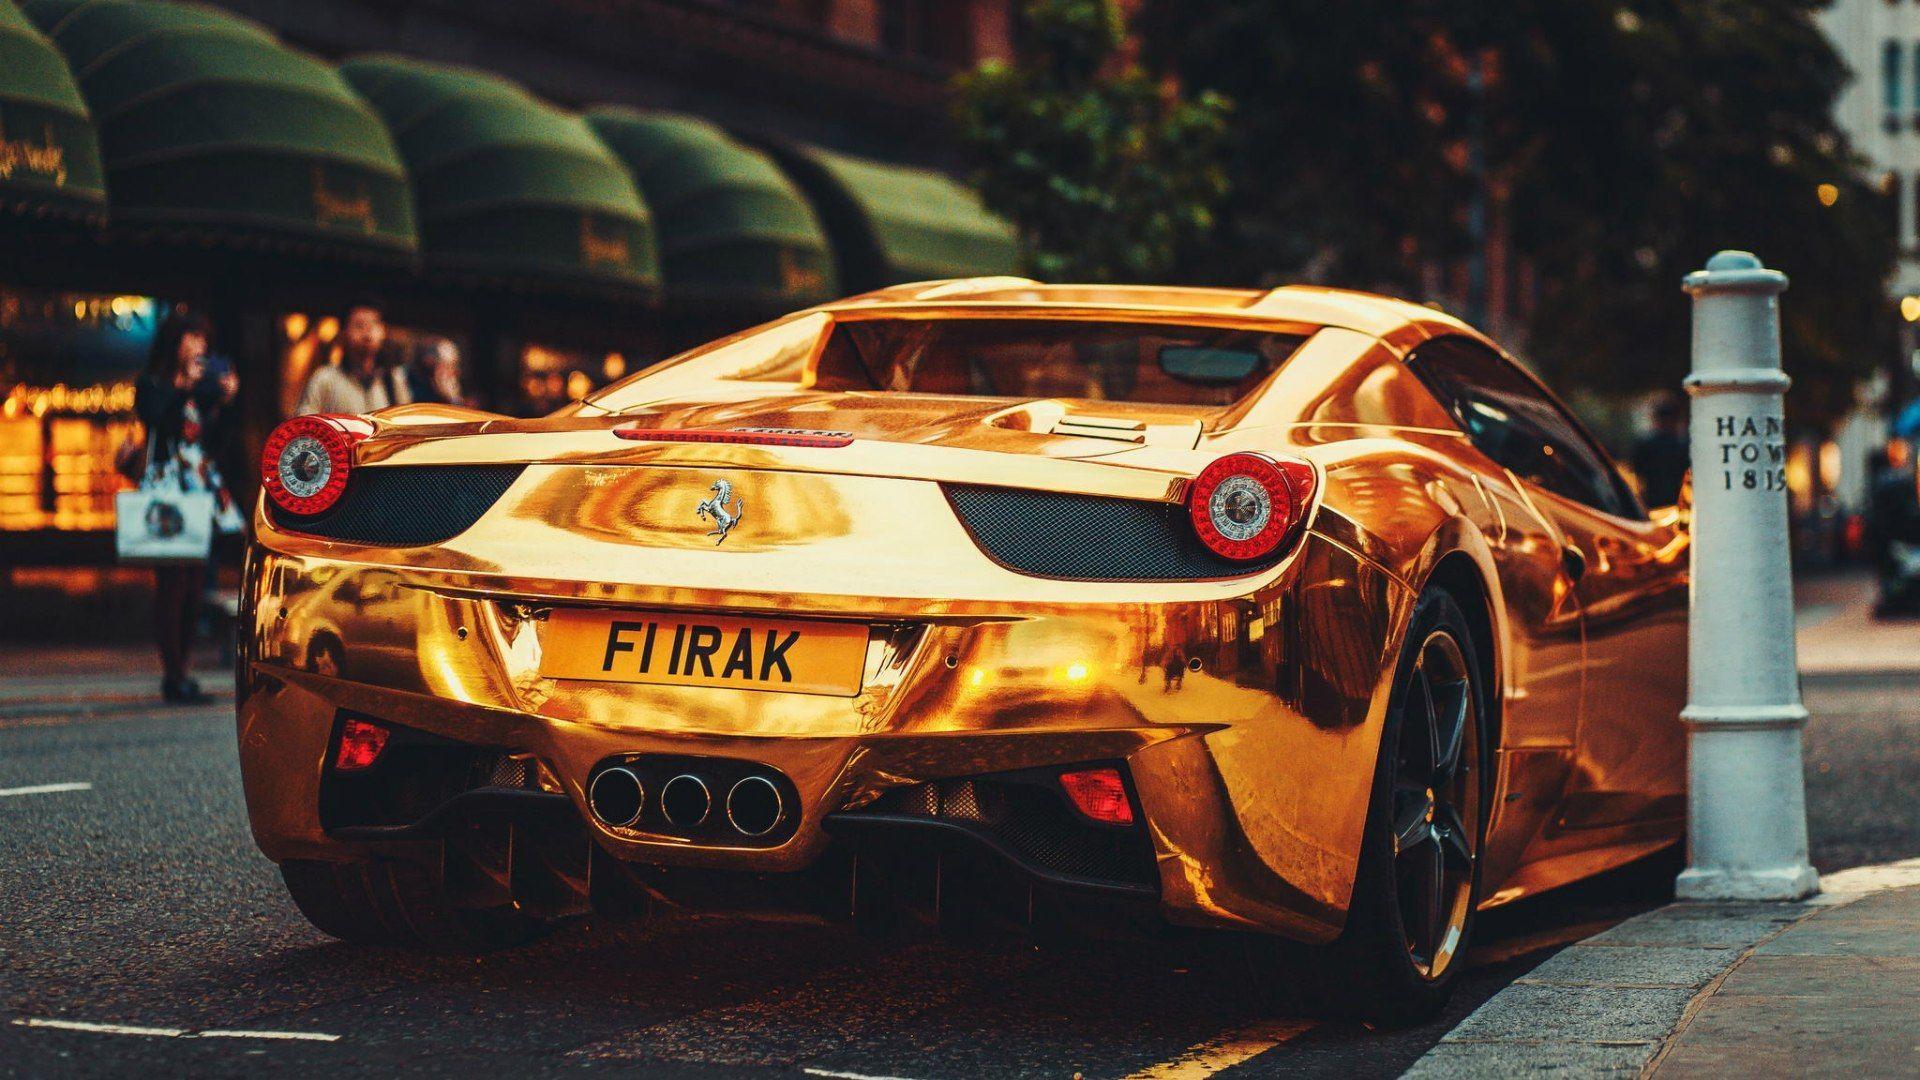 Gold Ferrari 458 Italia wallpaper and image. Cars